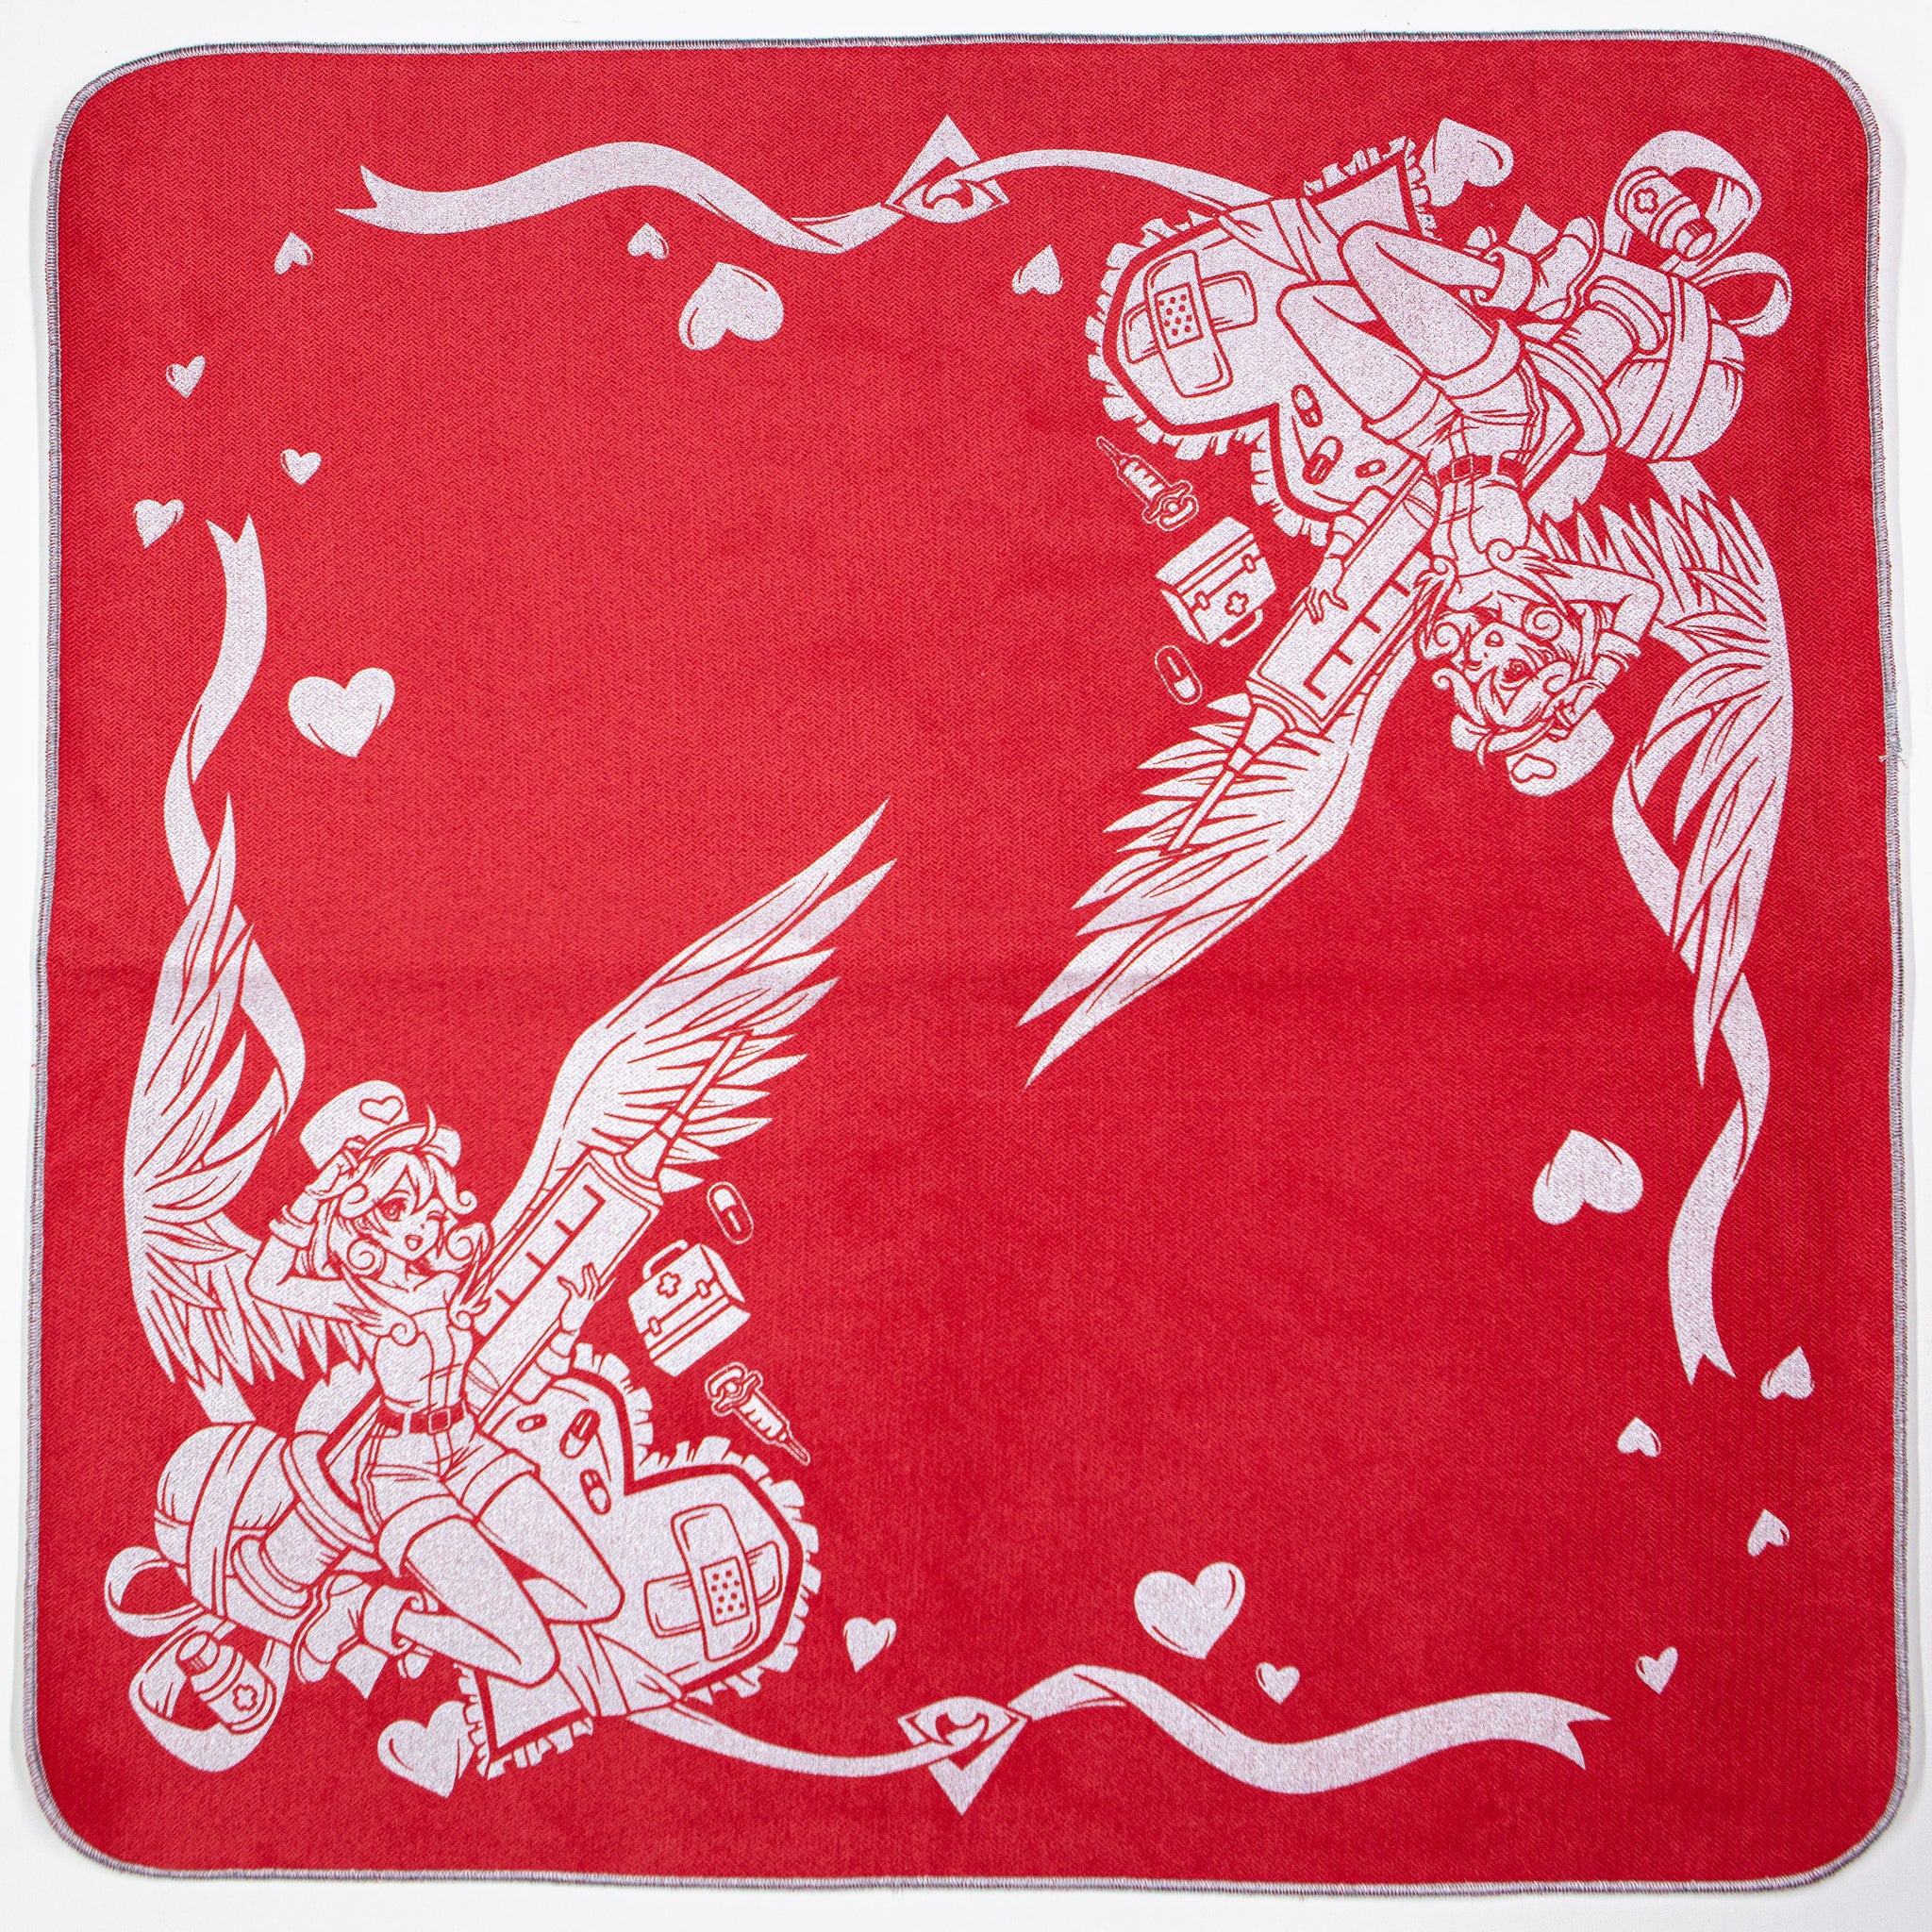 Valentine's Lily | PROTOTYPE | Crossmesh Cardinal x Silver Foil